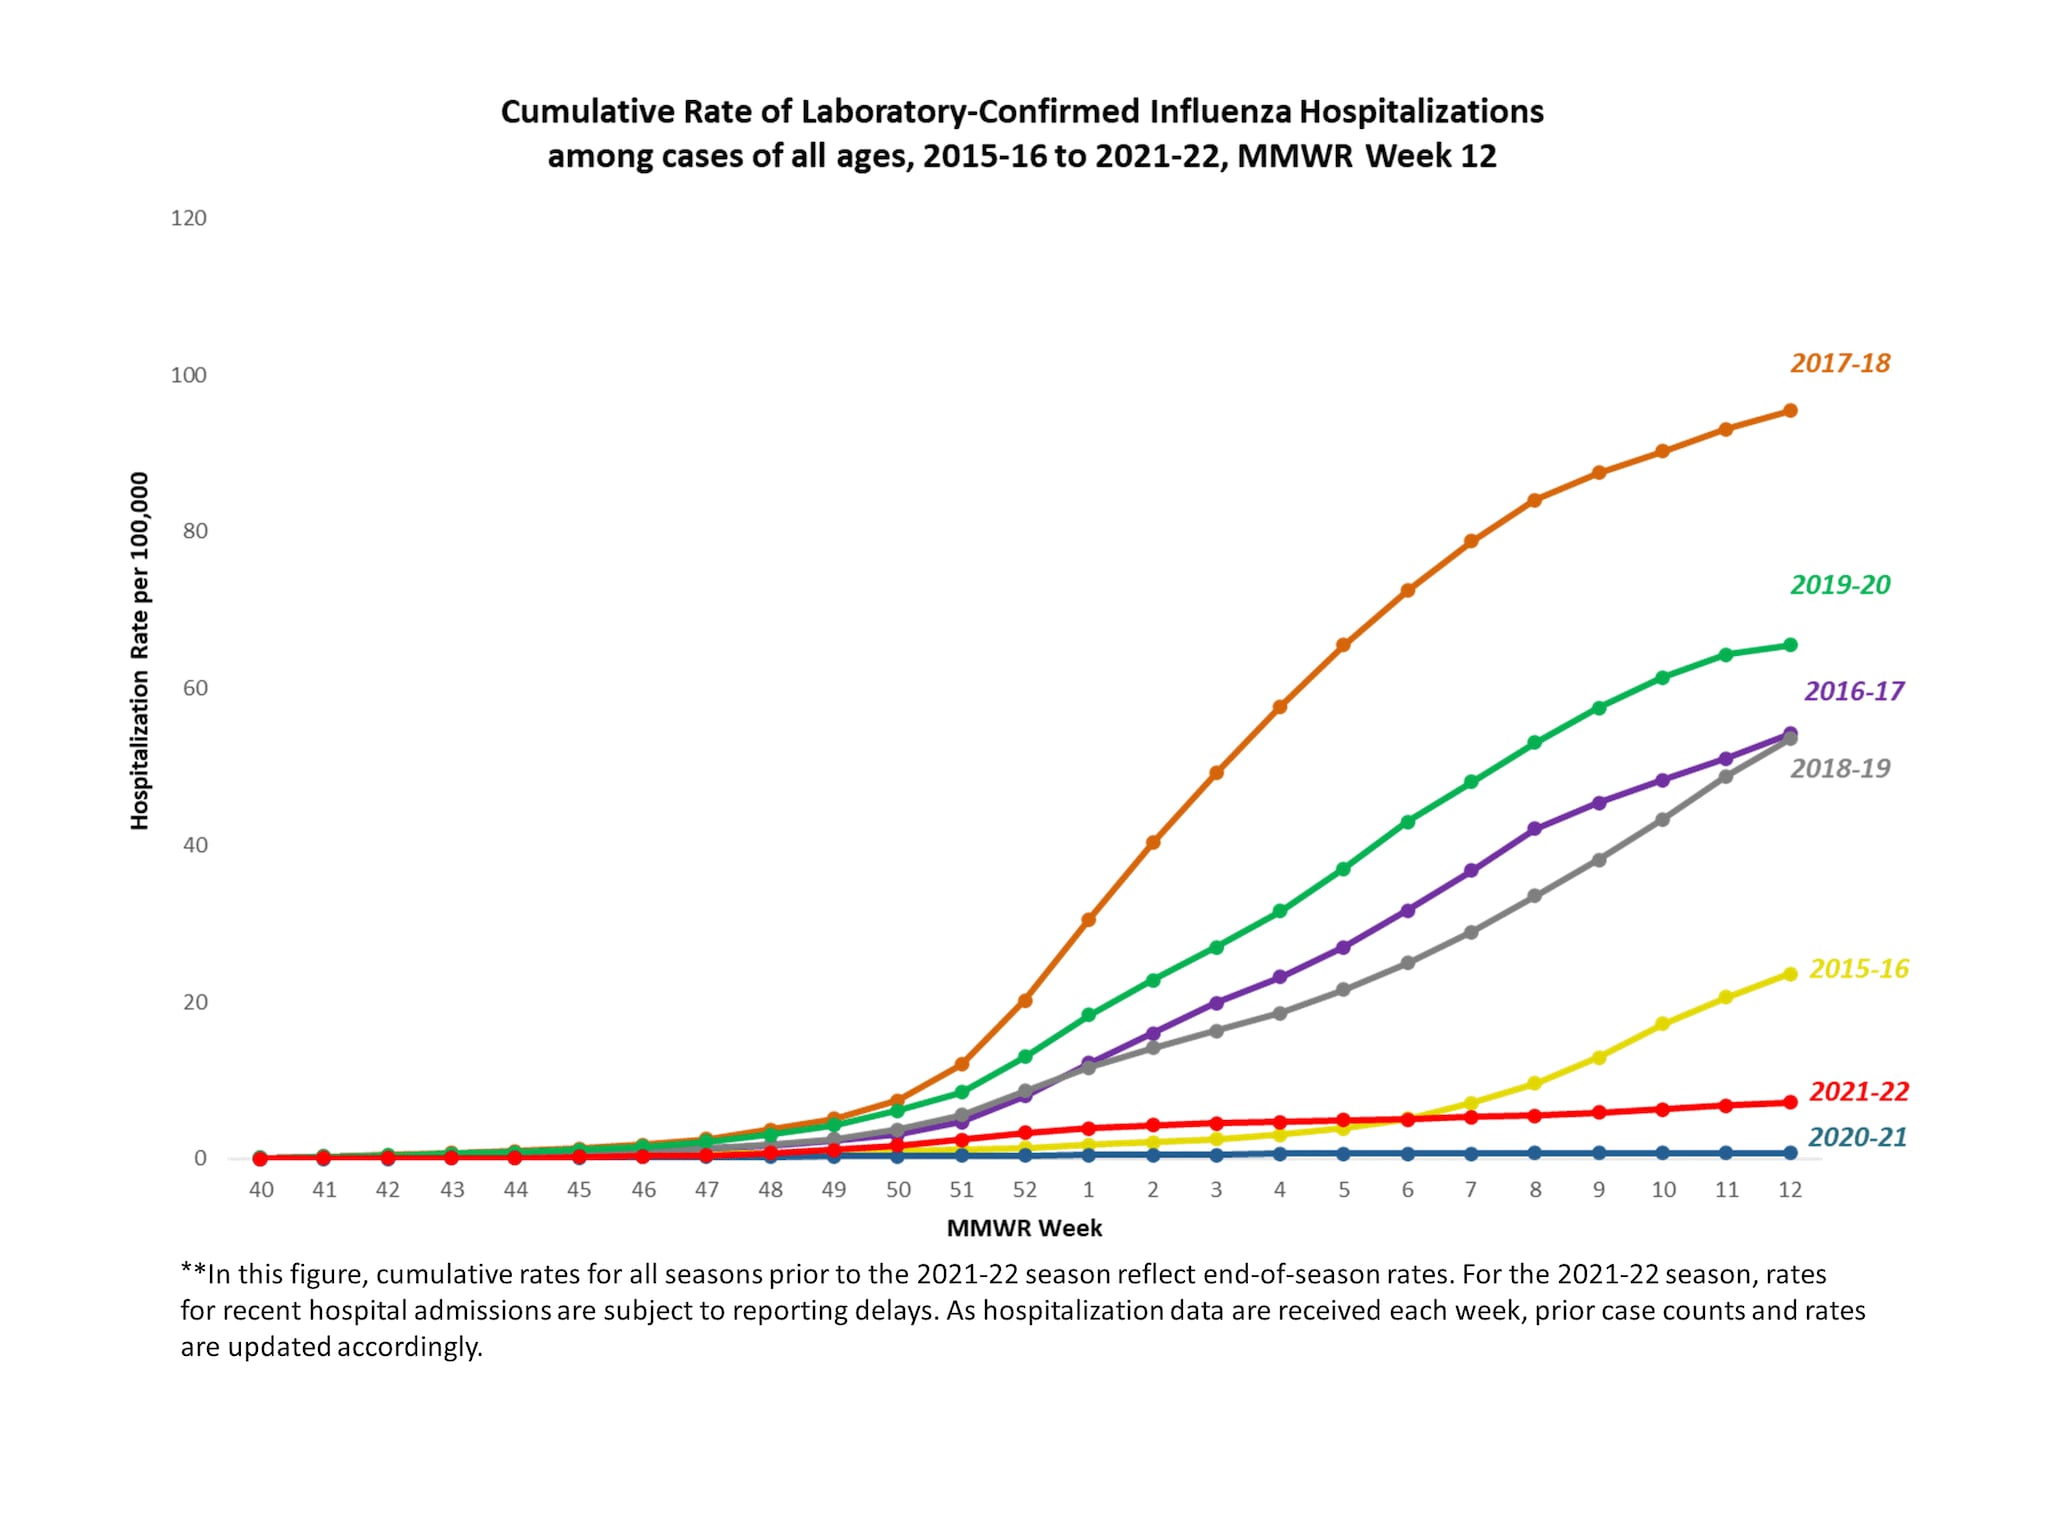 FluSurv-Net Laboratory Confirmed Cumulative Hospitalization Rates (per 100,000), Season 2021-22 Season